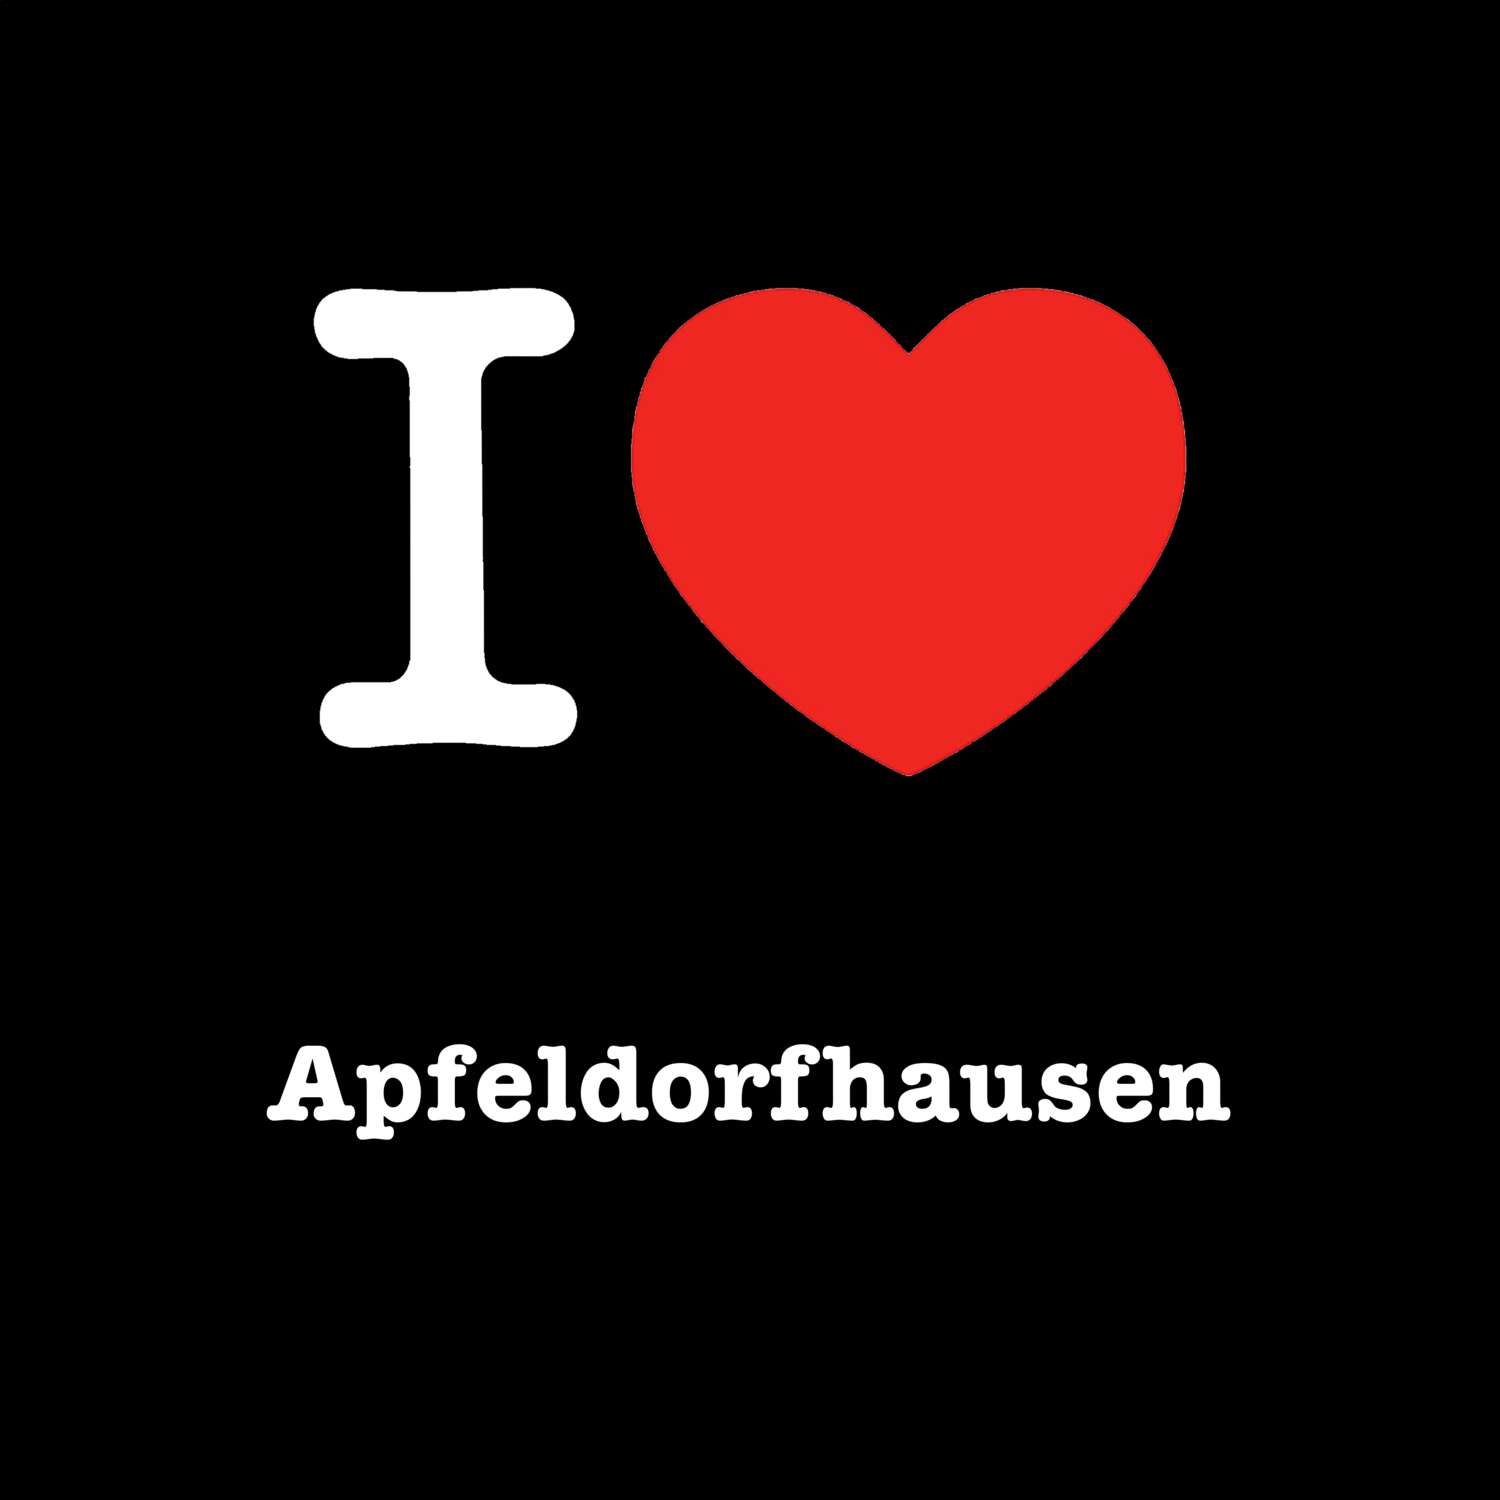 Apfeldorfhausen T-Shirt »I love«